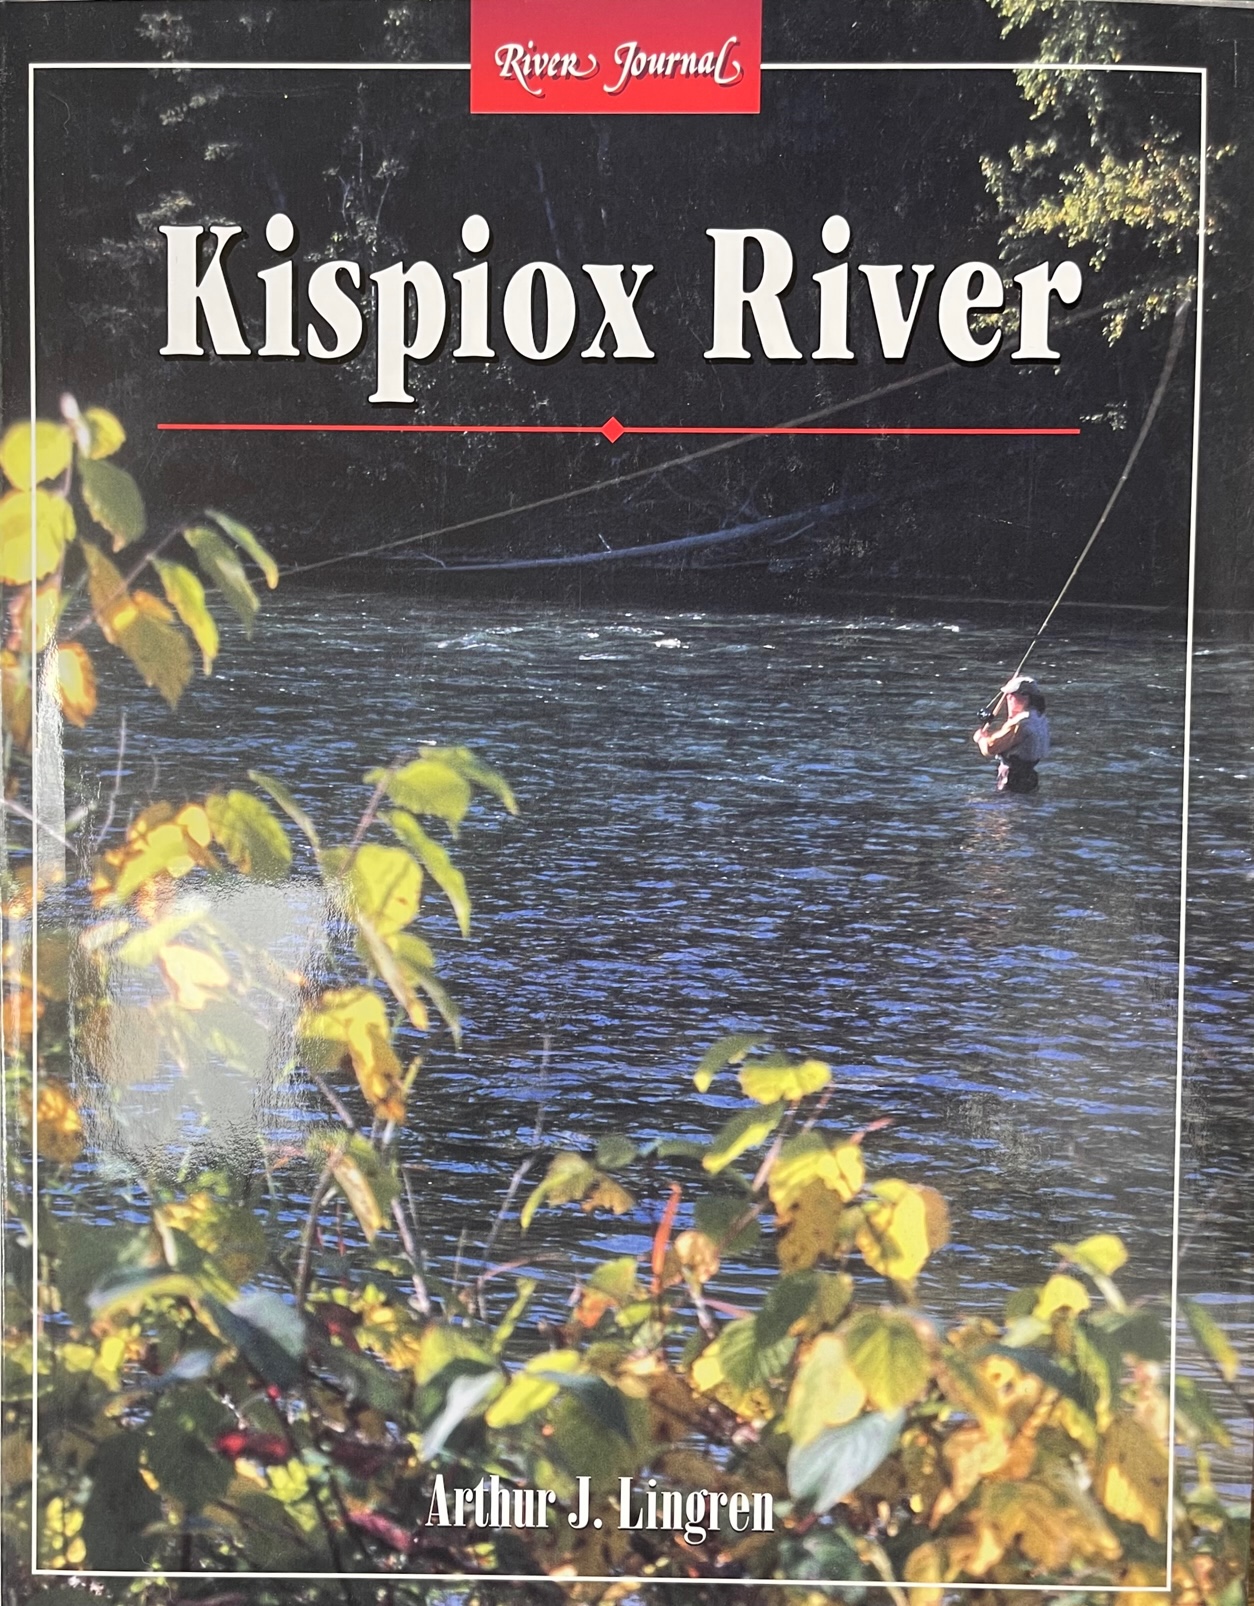 River Journal: Kispiox River